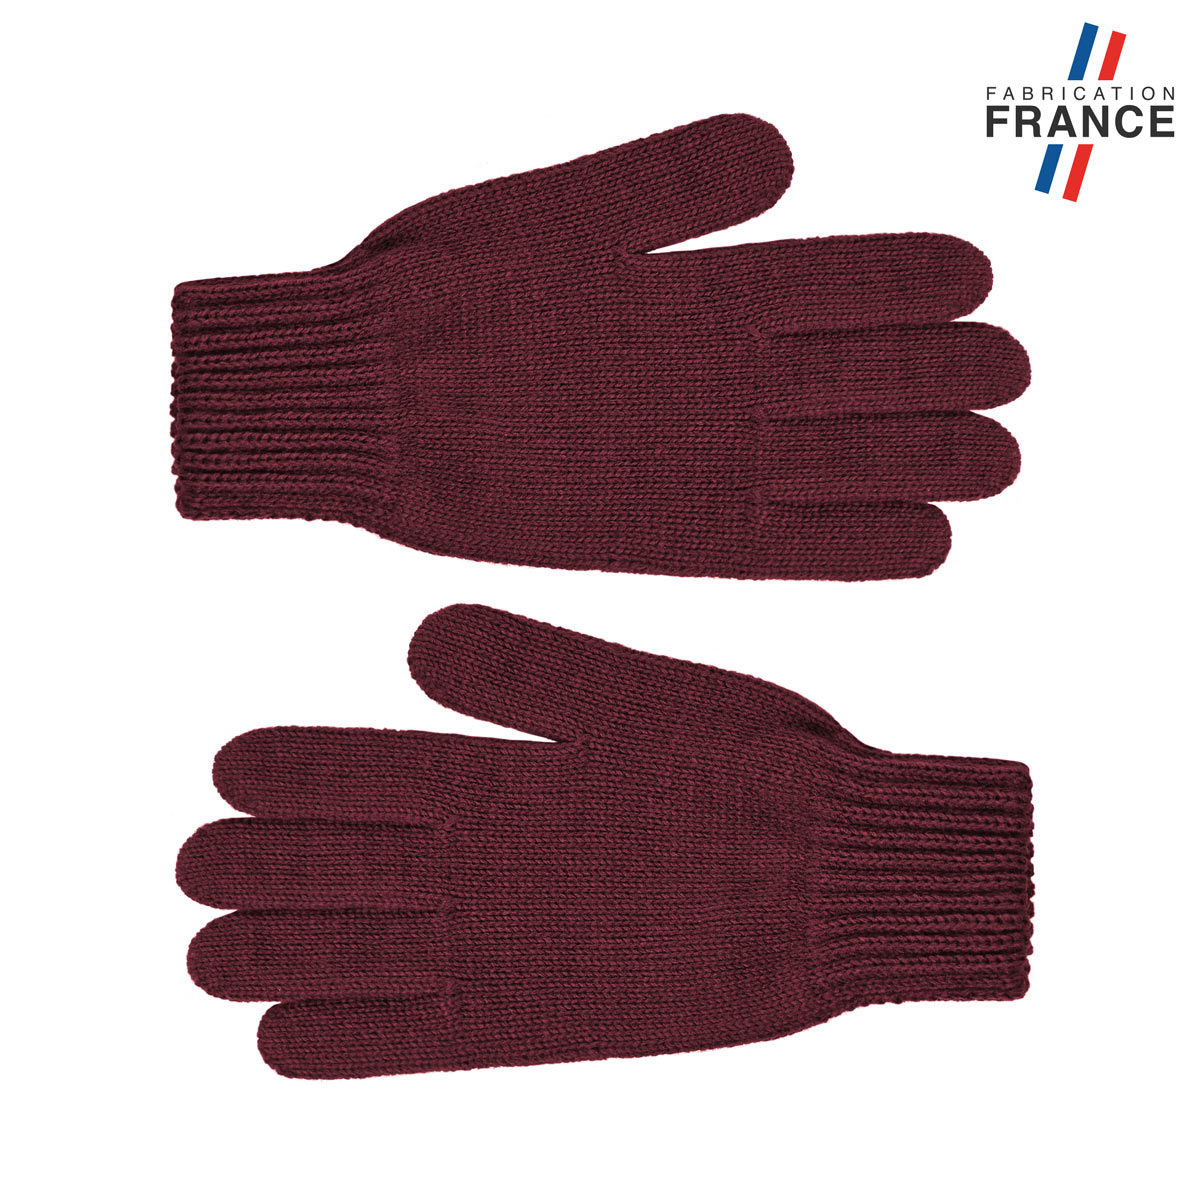 GA-00040_A12-1FR_Paire-gants_femme-rouge-bordeaux-made-in-France